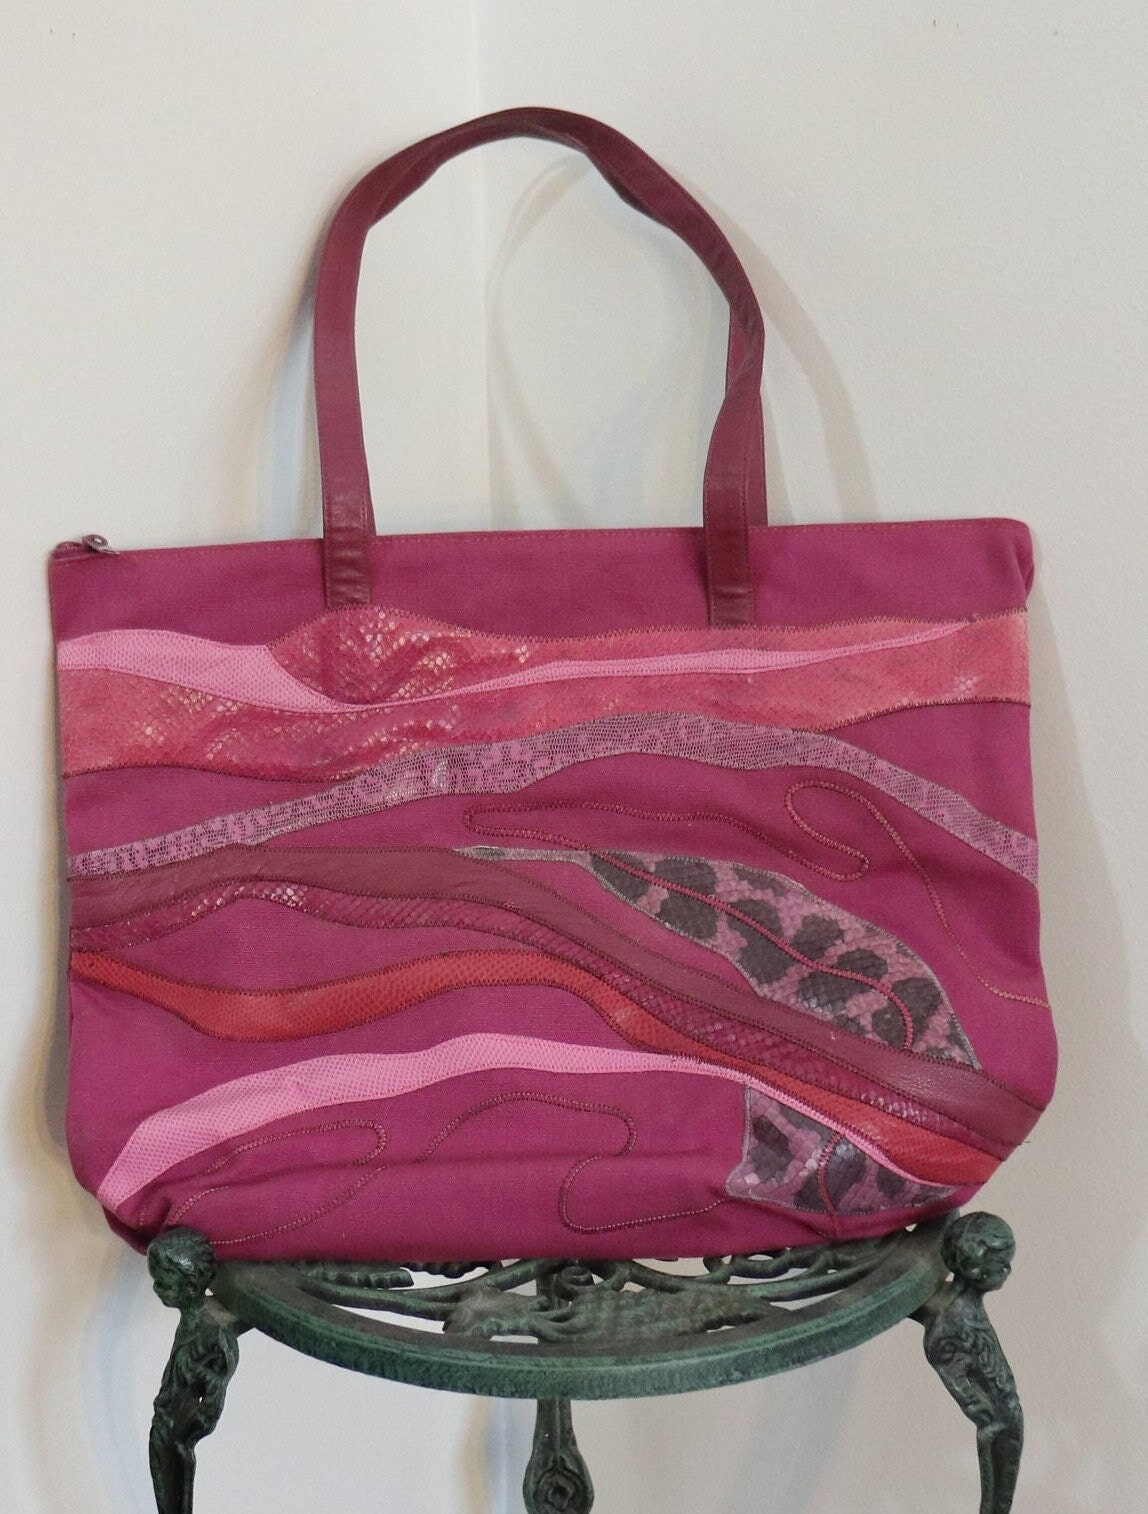 COACH Handbags for sale in Gila, Illinois